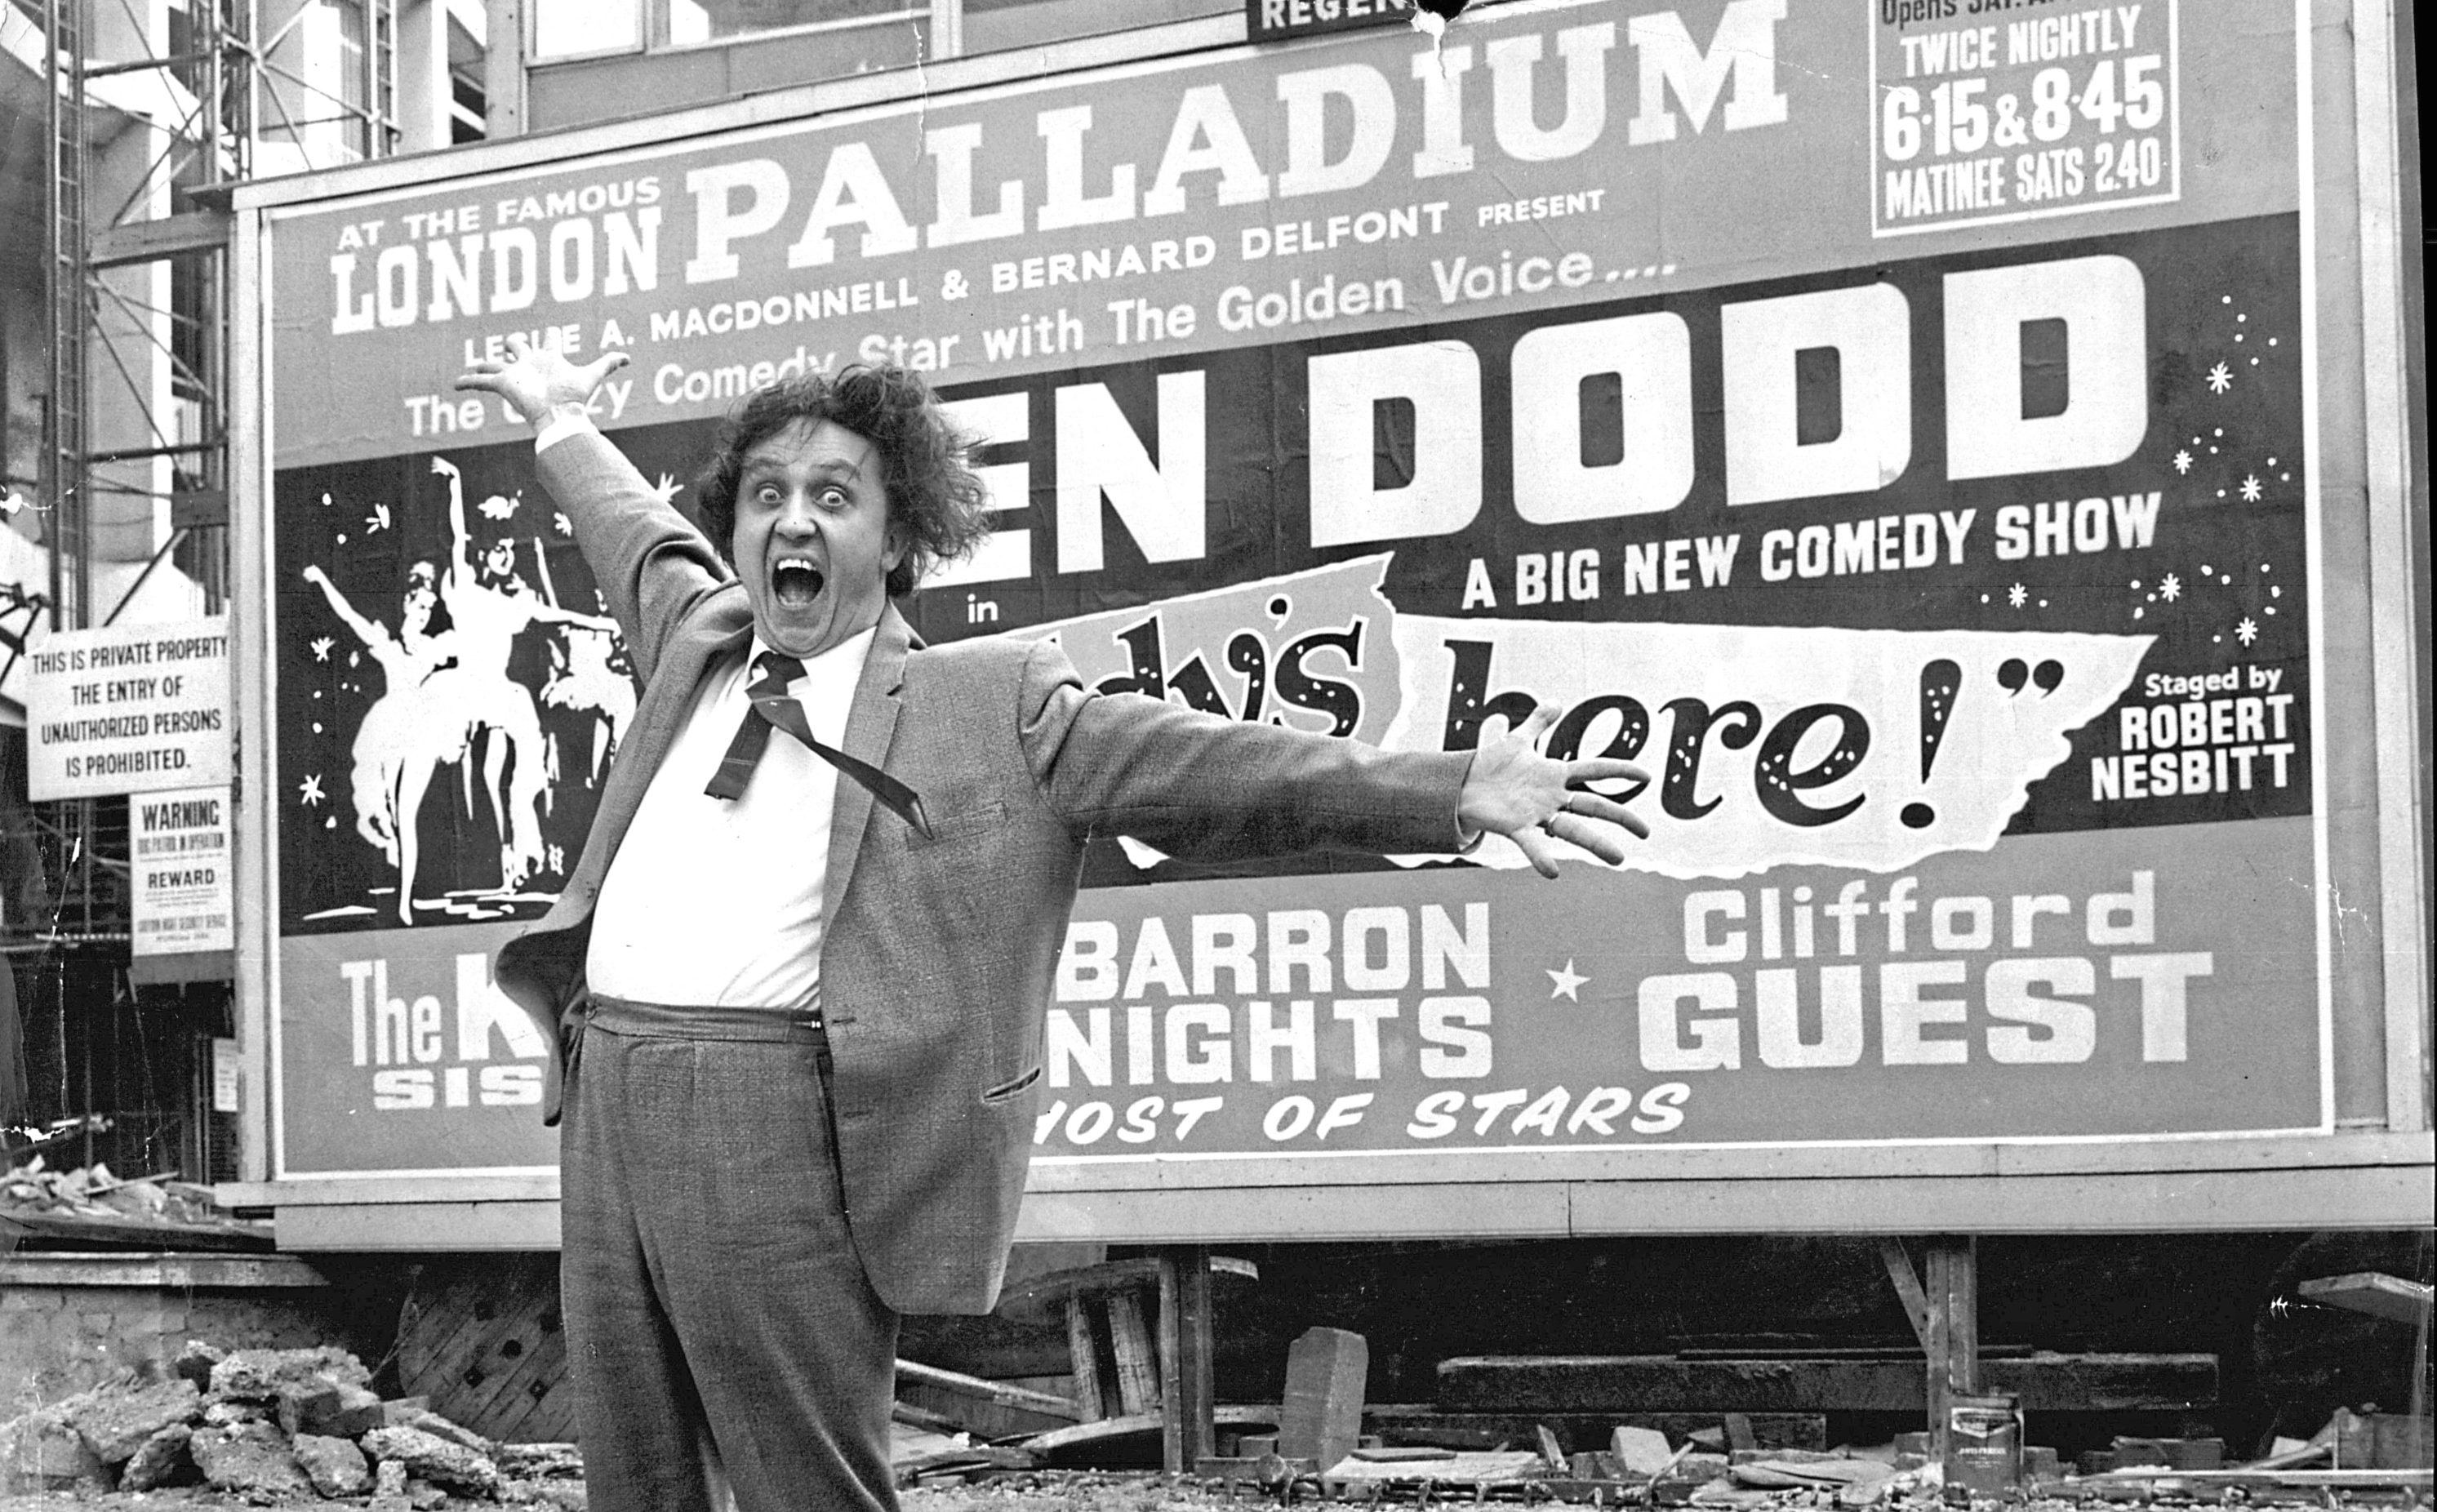 Doddy headlined the London Palladium in 1965